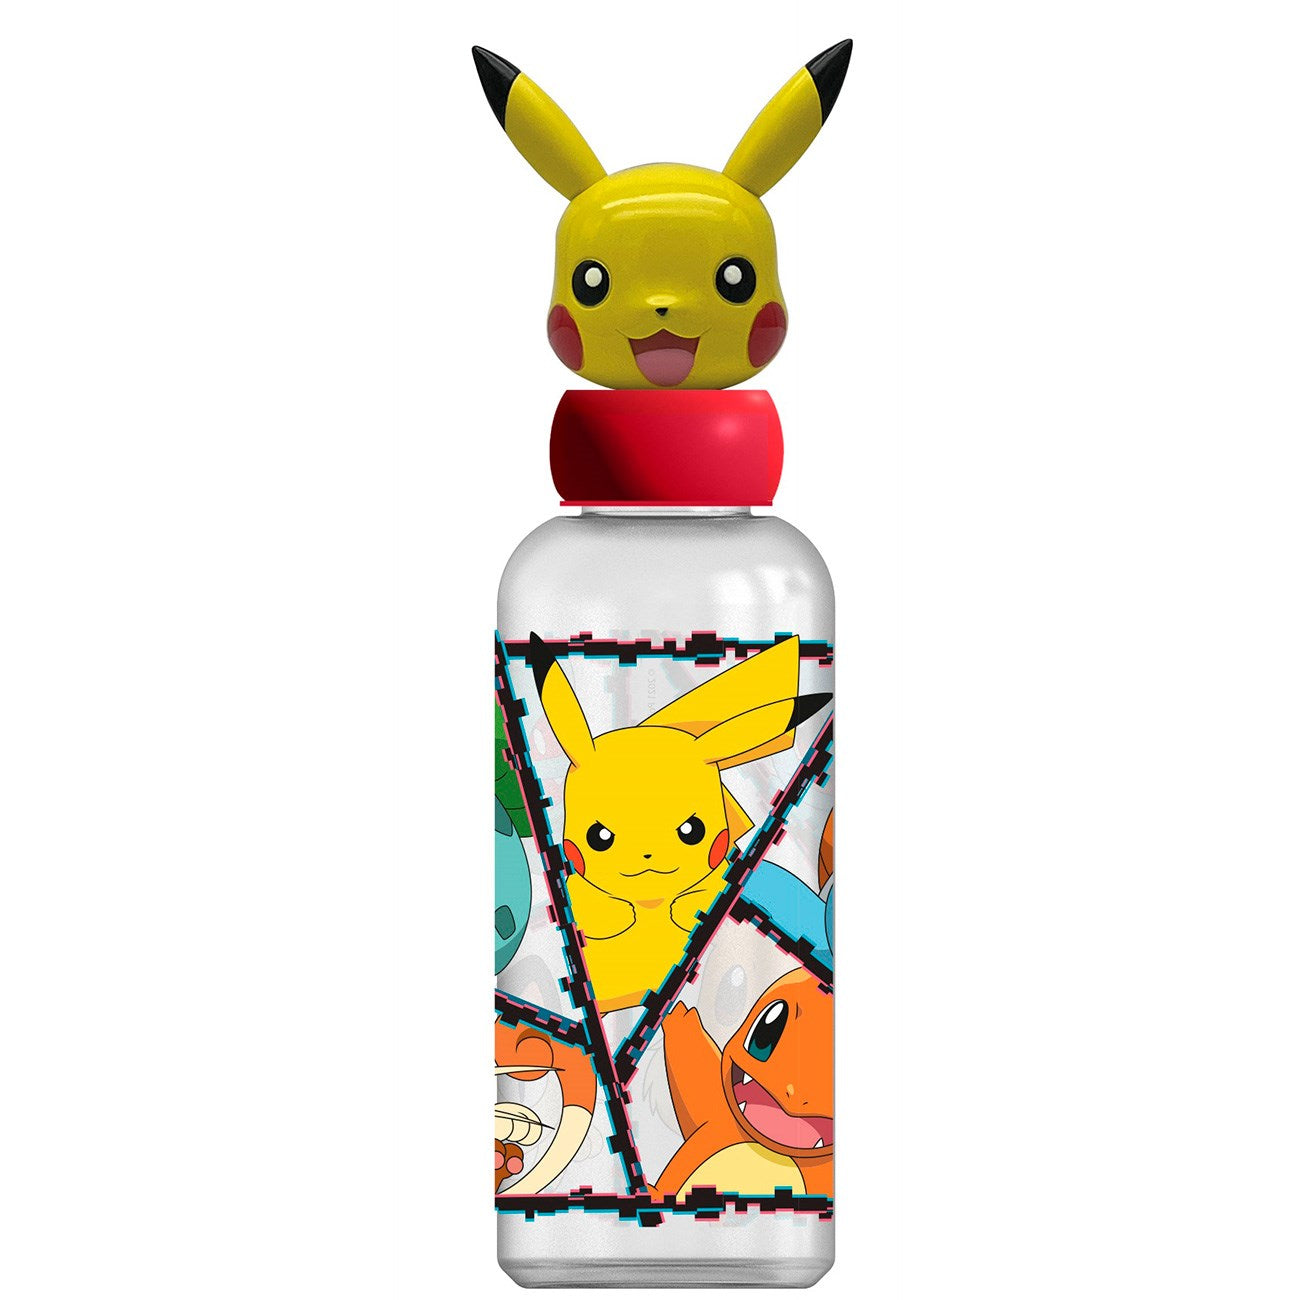 Euromic Pokemon vannflaske med 3D figur toppen